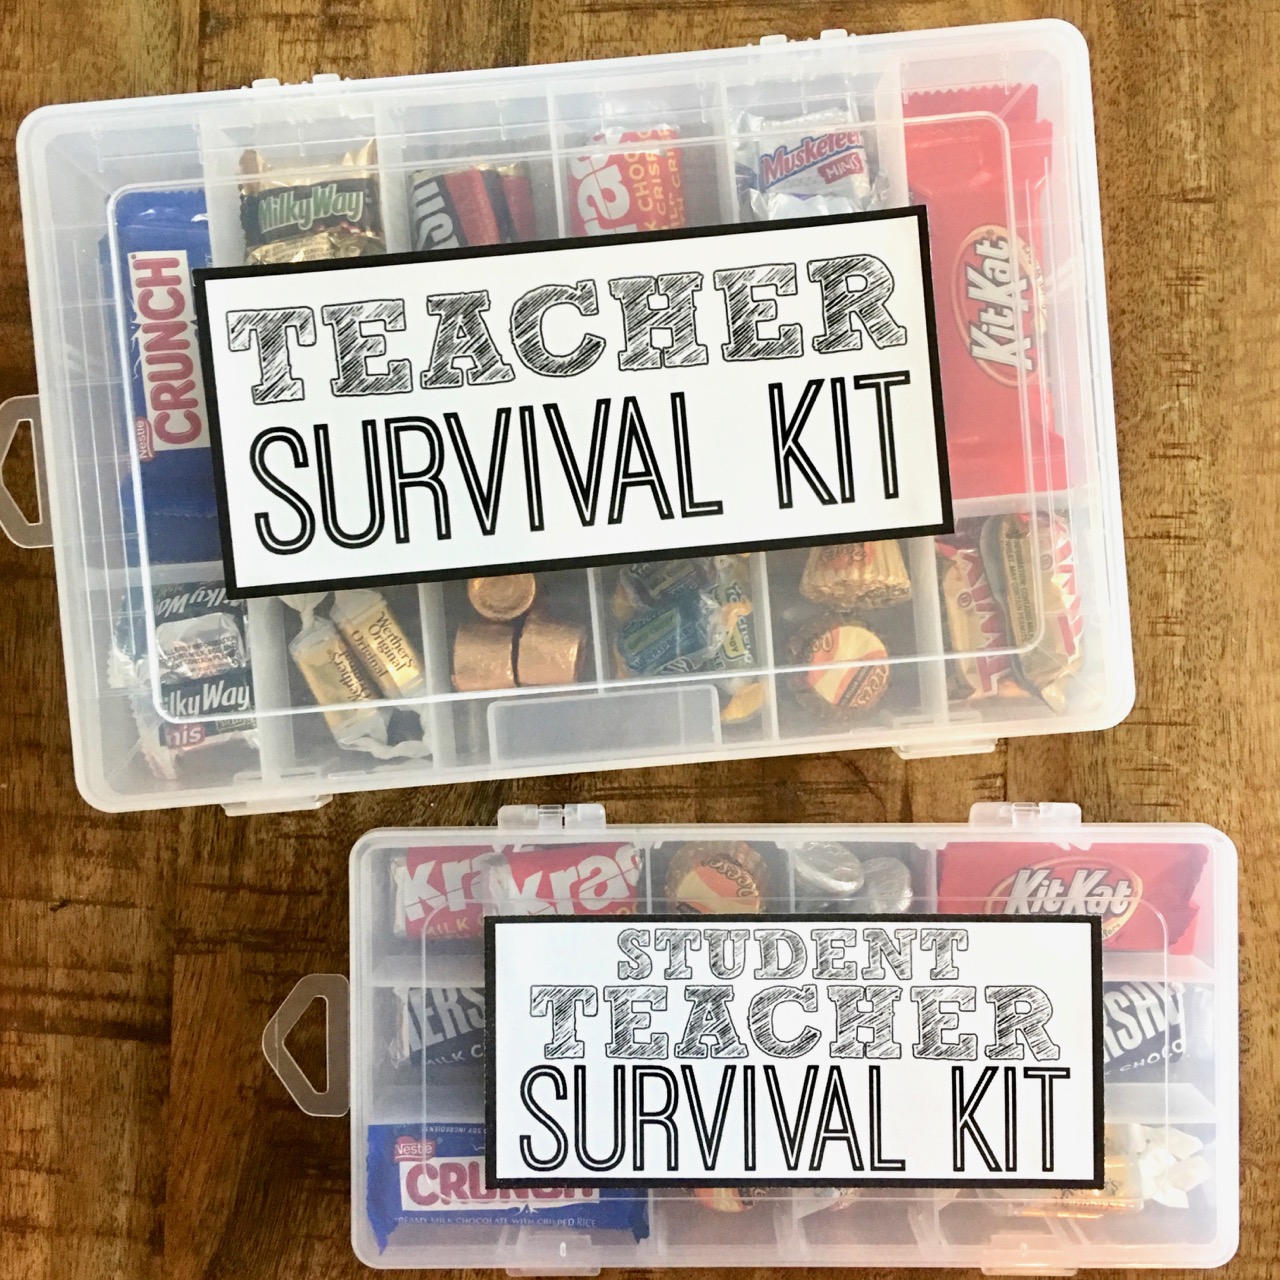 MUST HAVES!!! Build a Teacher Survival Kit Today!  Teacher survival,  Survival kit for teachers, School survival kits